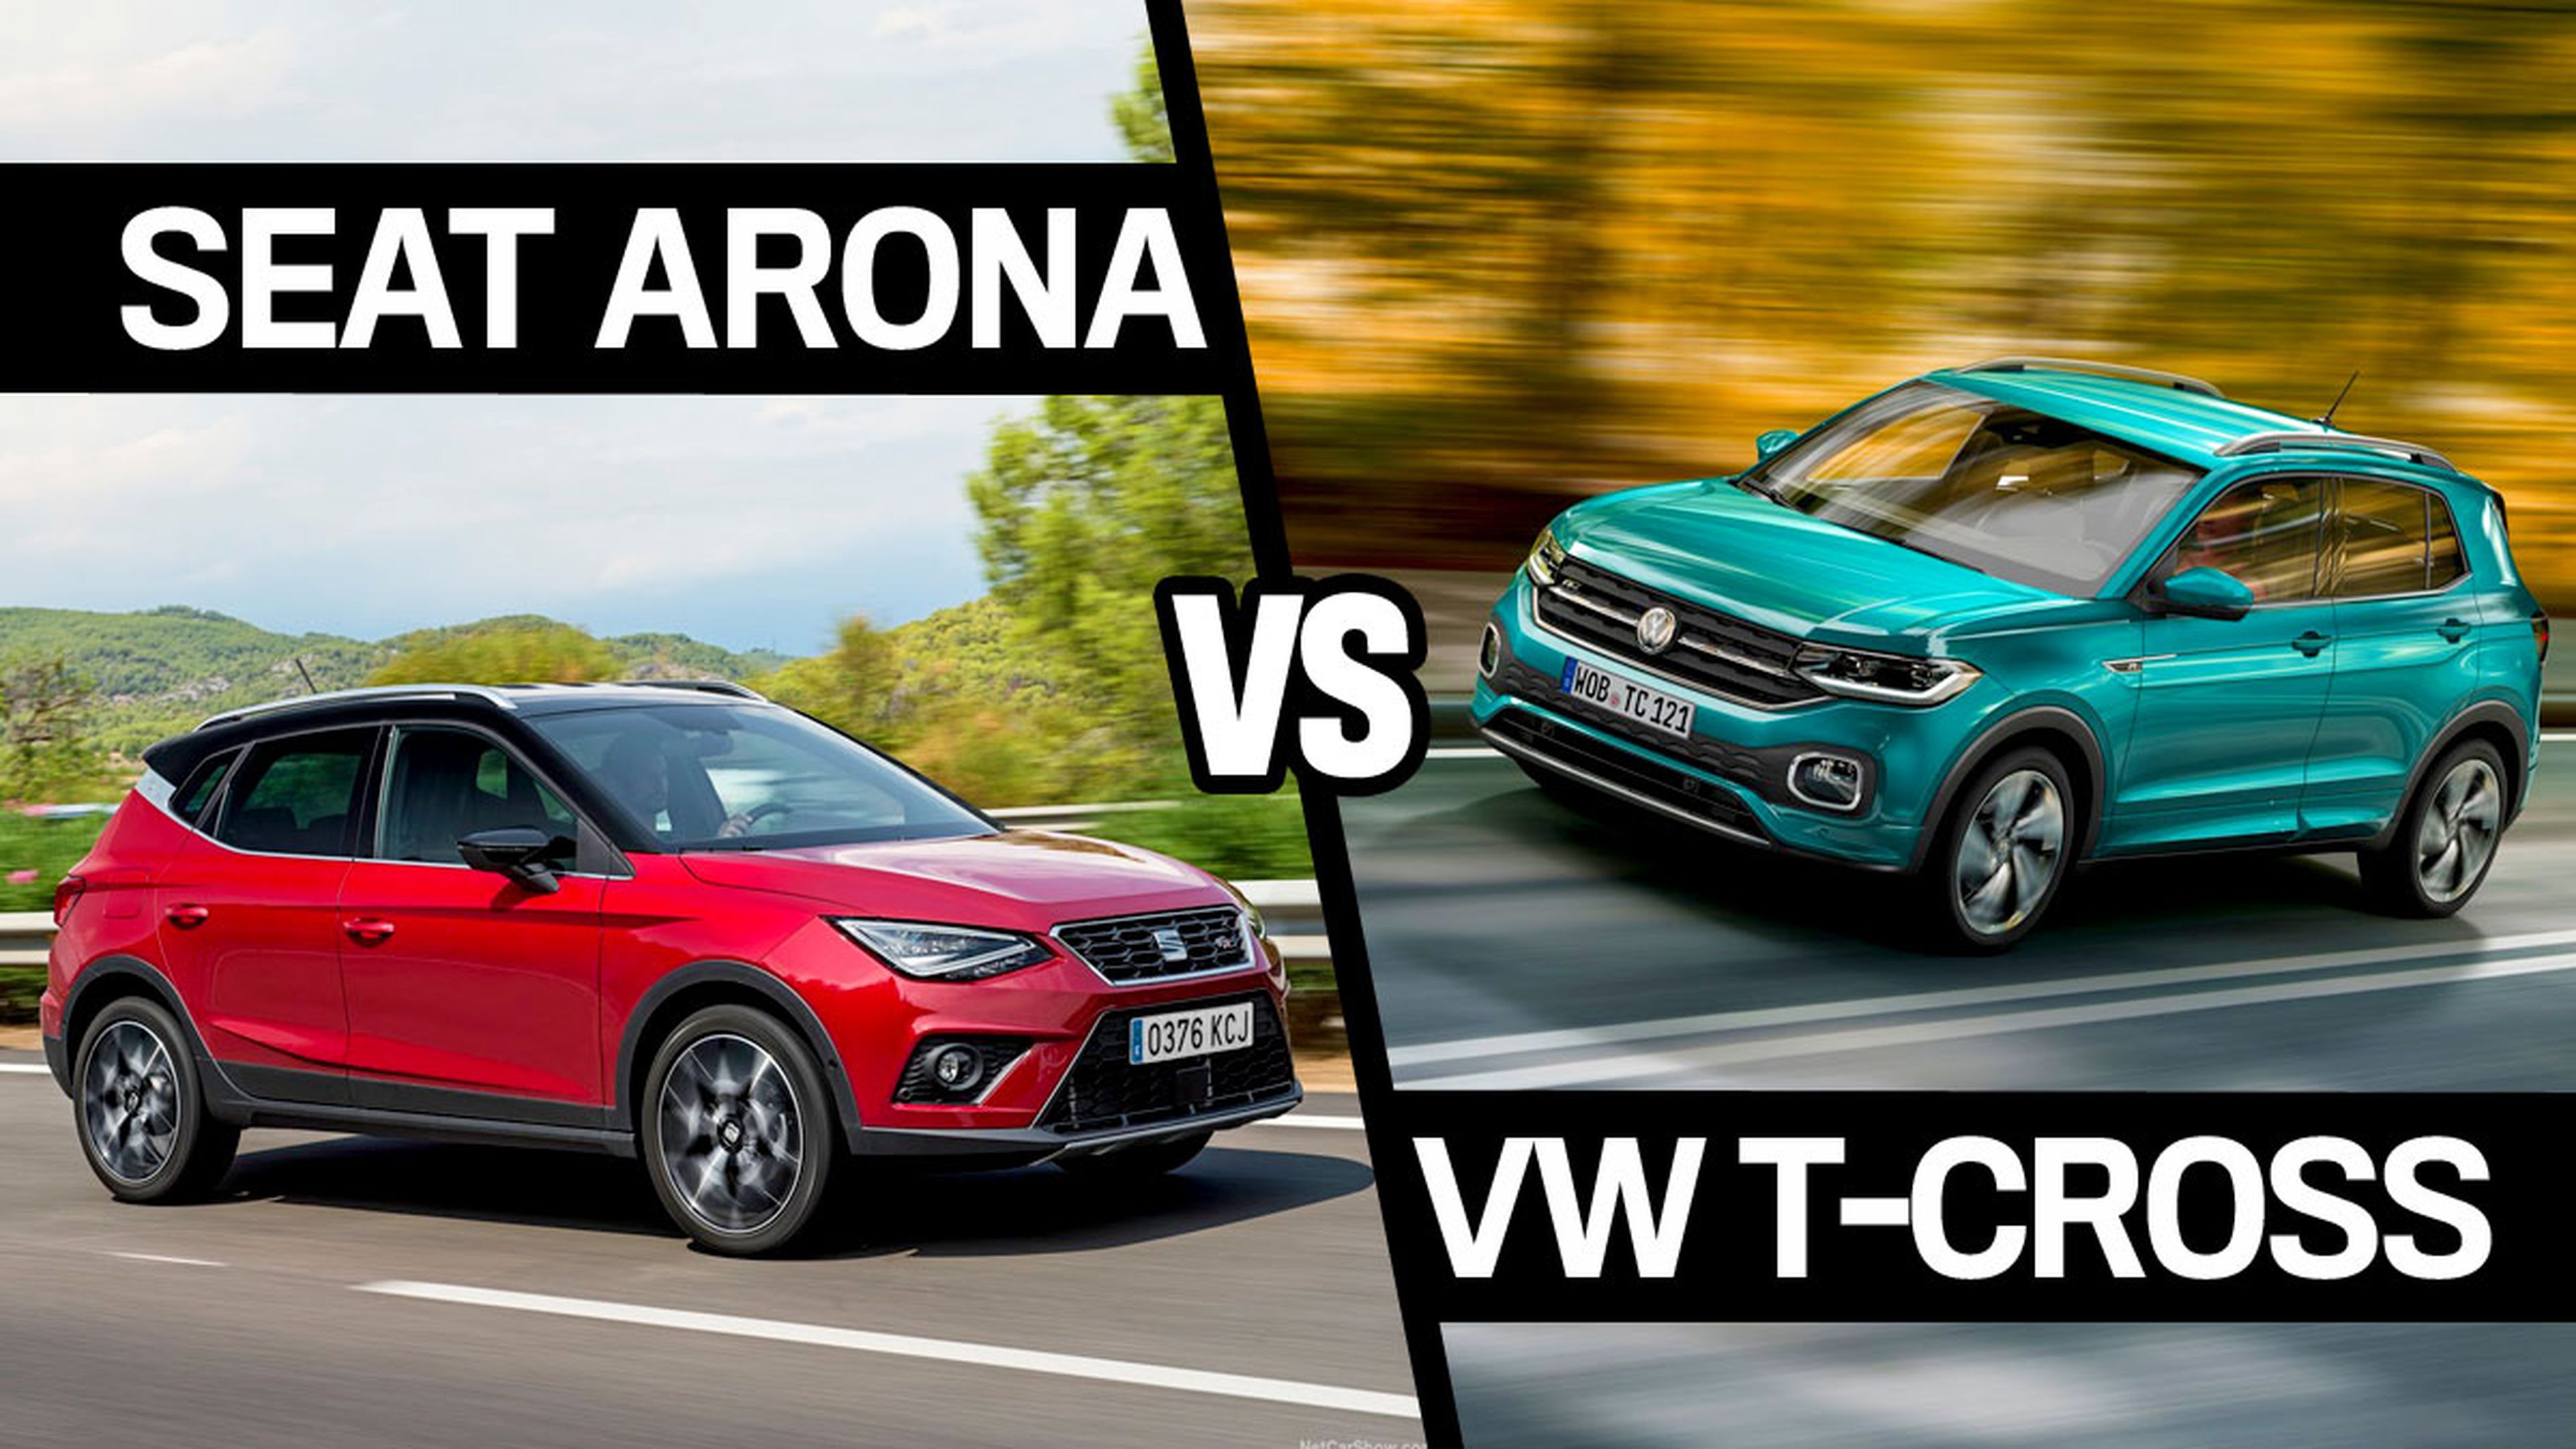 Seat Arona vs VW T-Cross